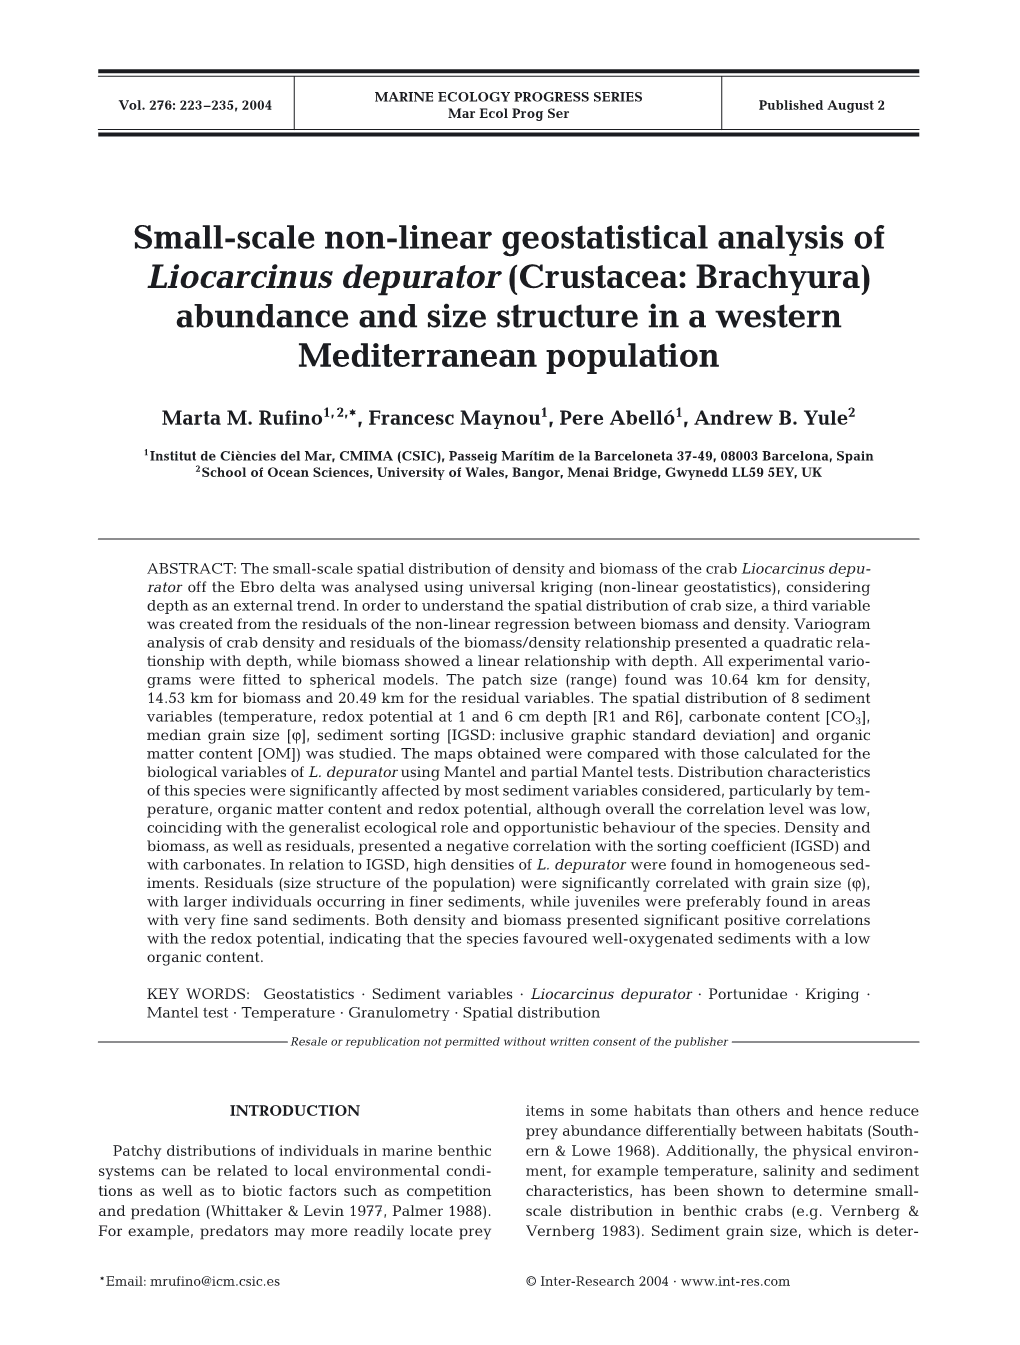 Small-Scale Non-Linear Geostatistical Analysis of Liocarcinus Depurator (Crustacea: Brachyura) Abundance and Size Structure in a Western Mediterranean Population